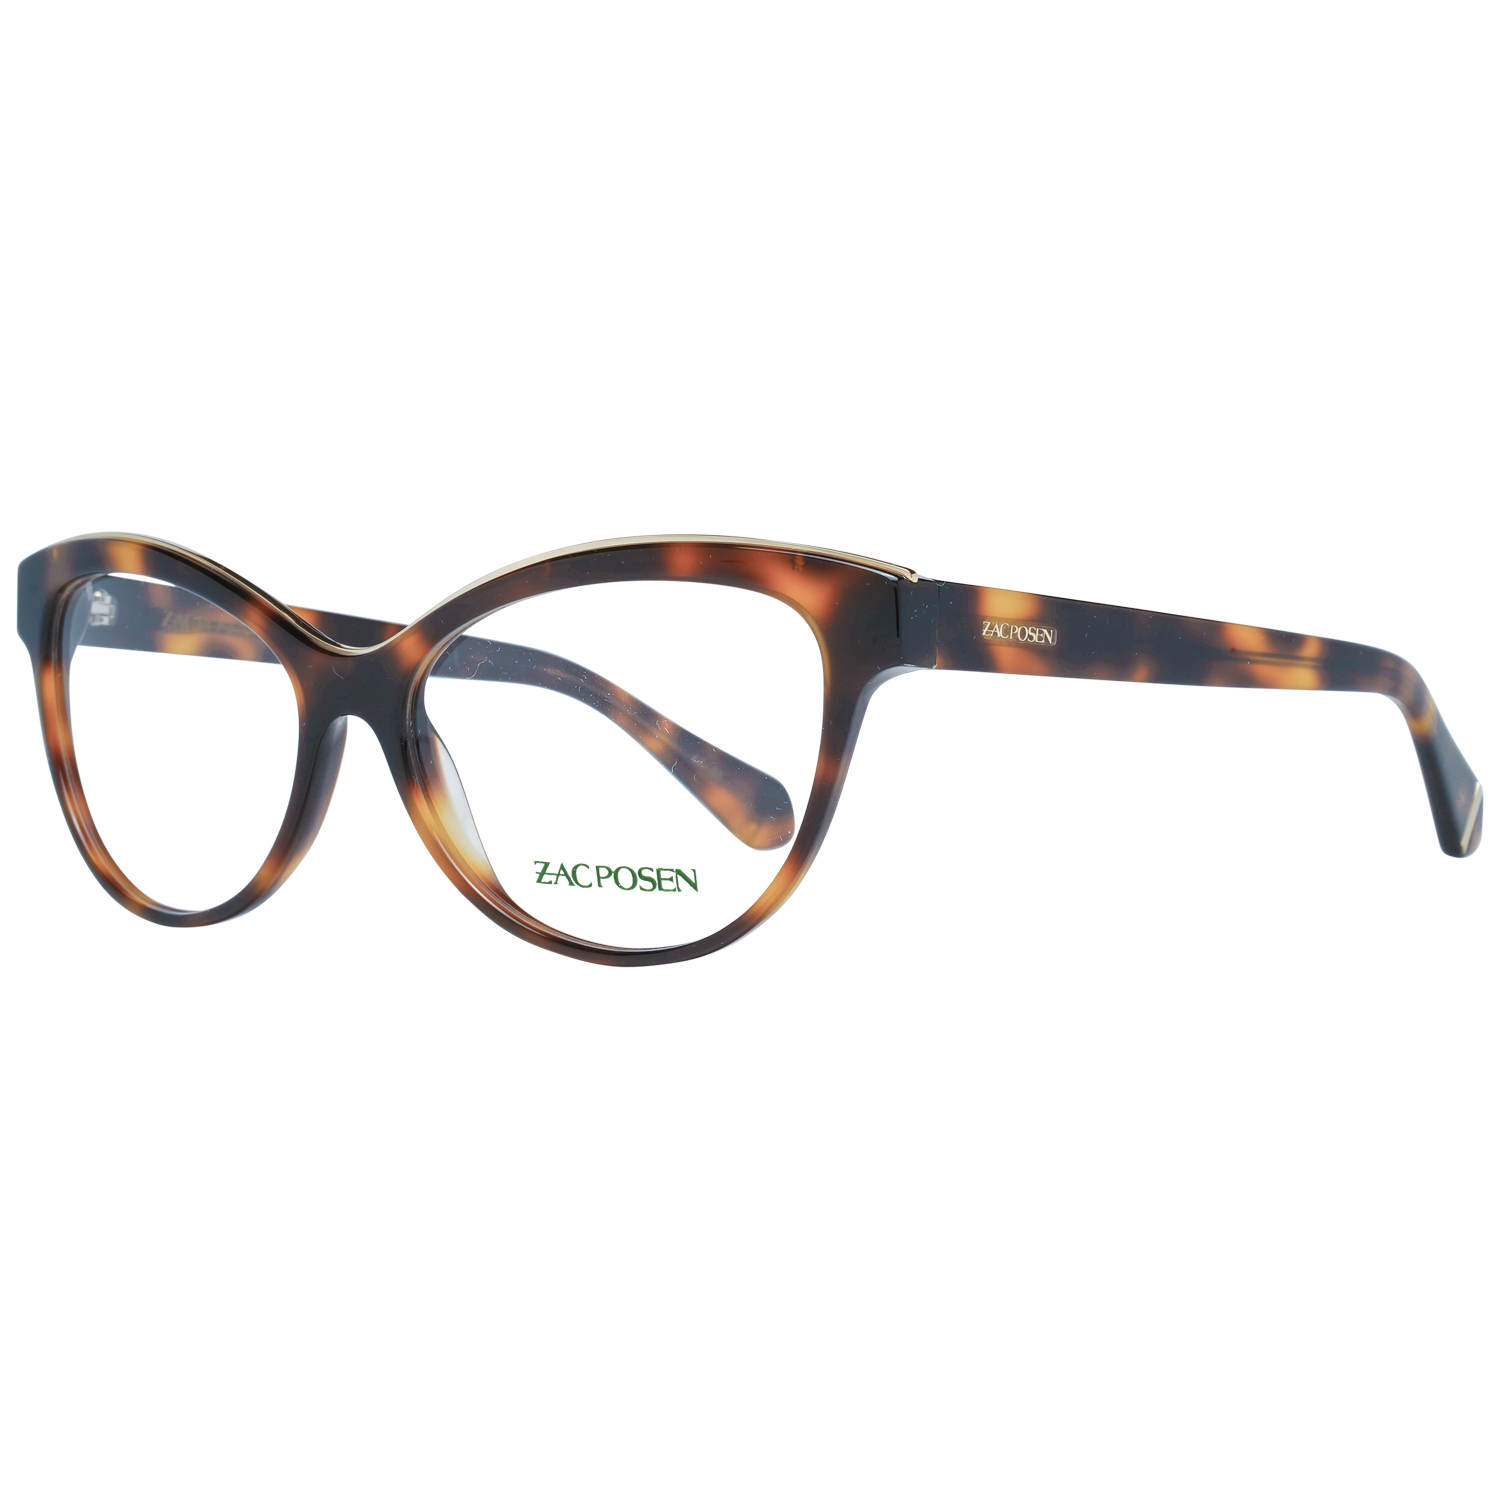 Zac Posen Frames Zac Posen Optical Frame ZJYC TO 54 Jayce Eyeglasses Eyewear UK USA Australia 